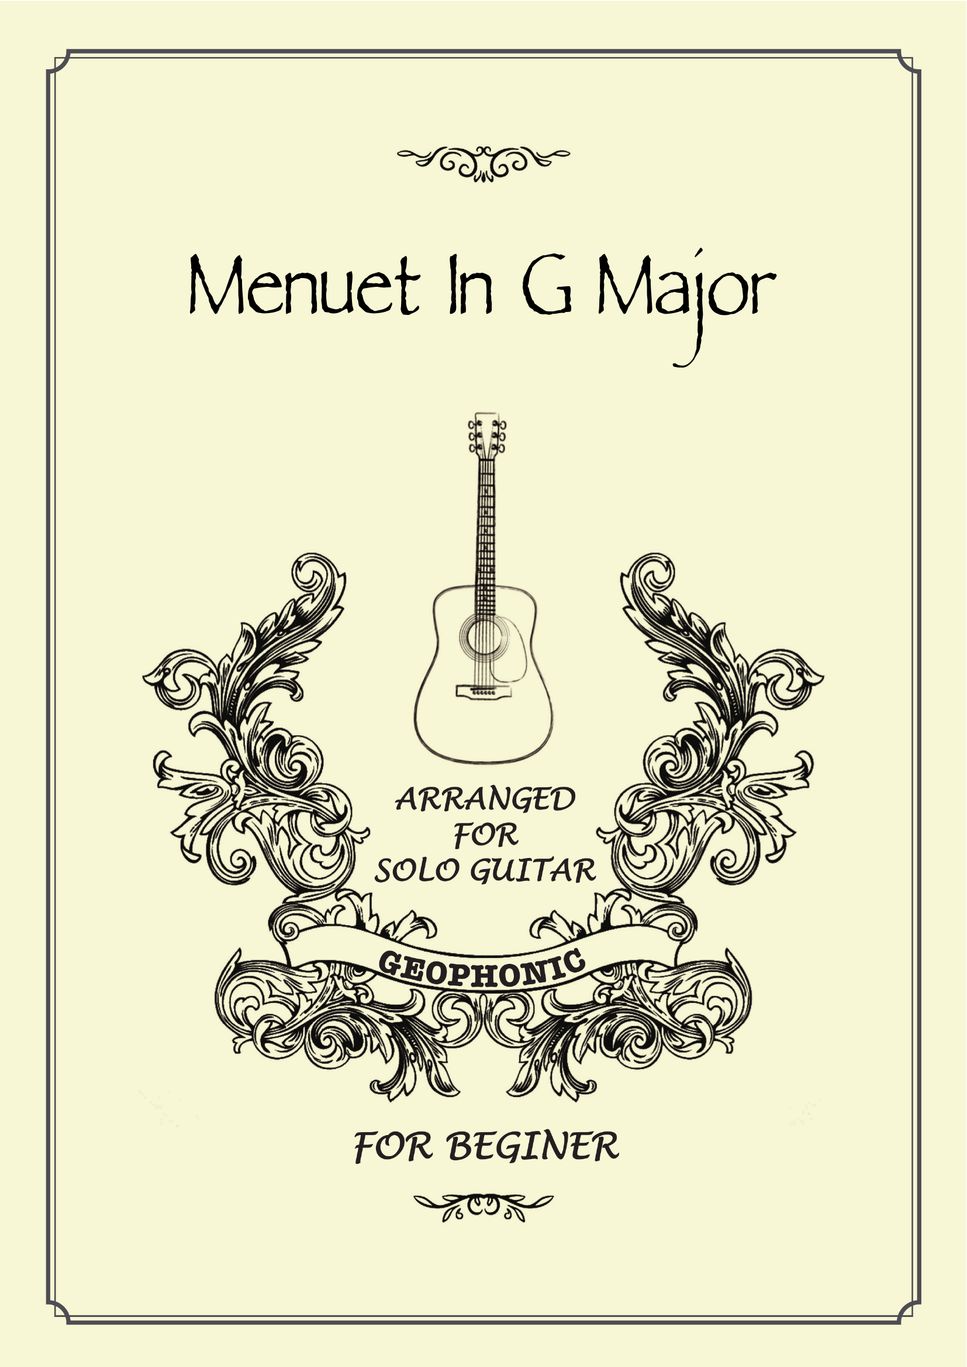 J.S Bach - Menuet In G Major by GEOPHONIC